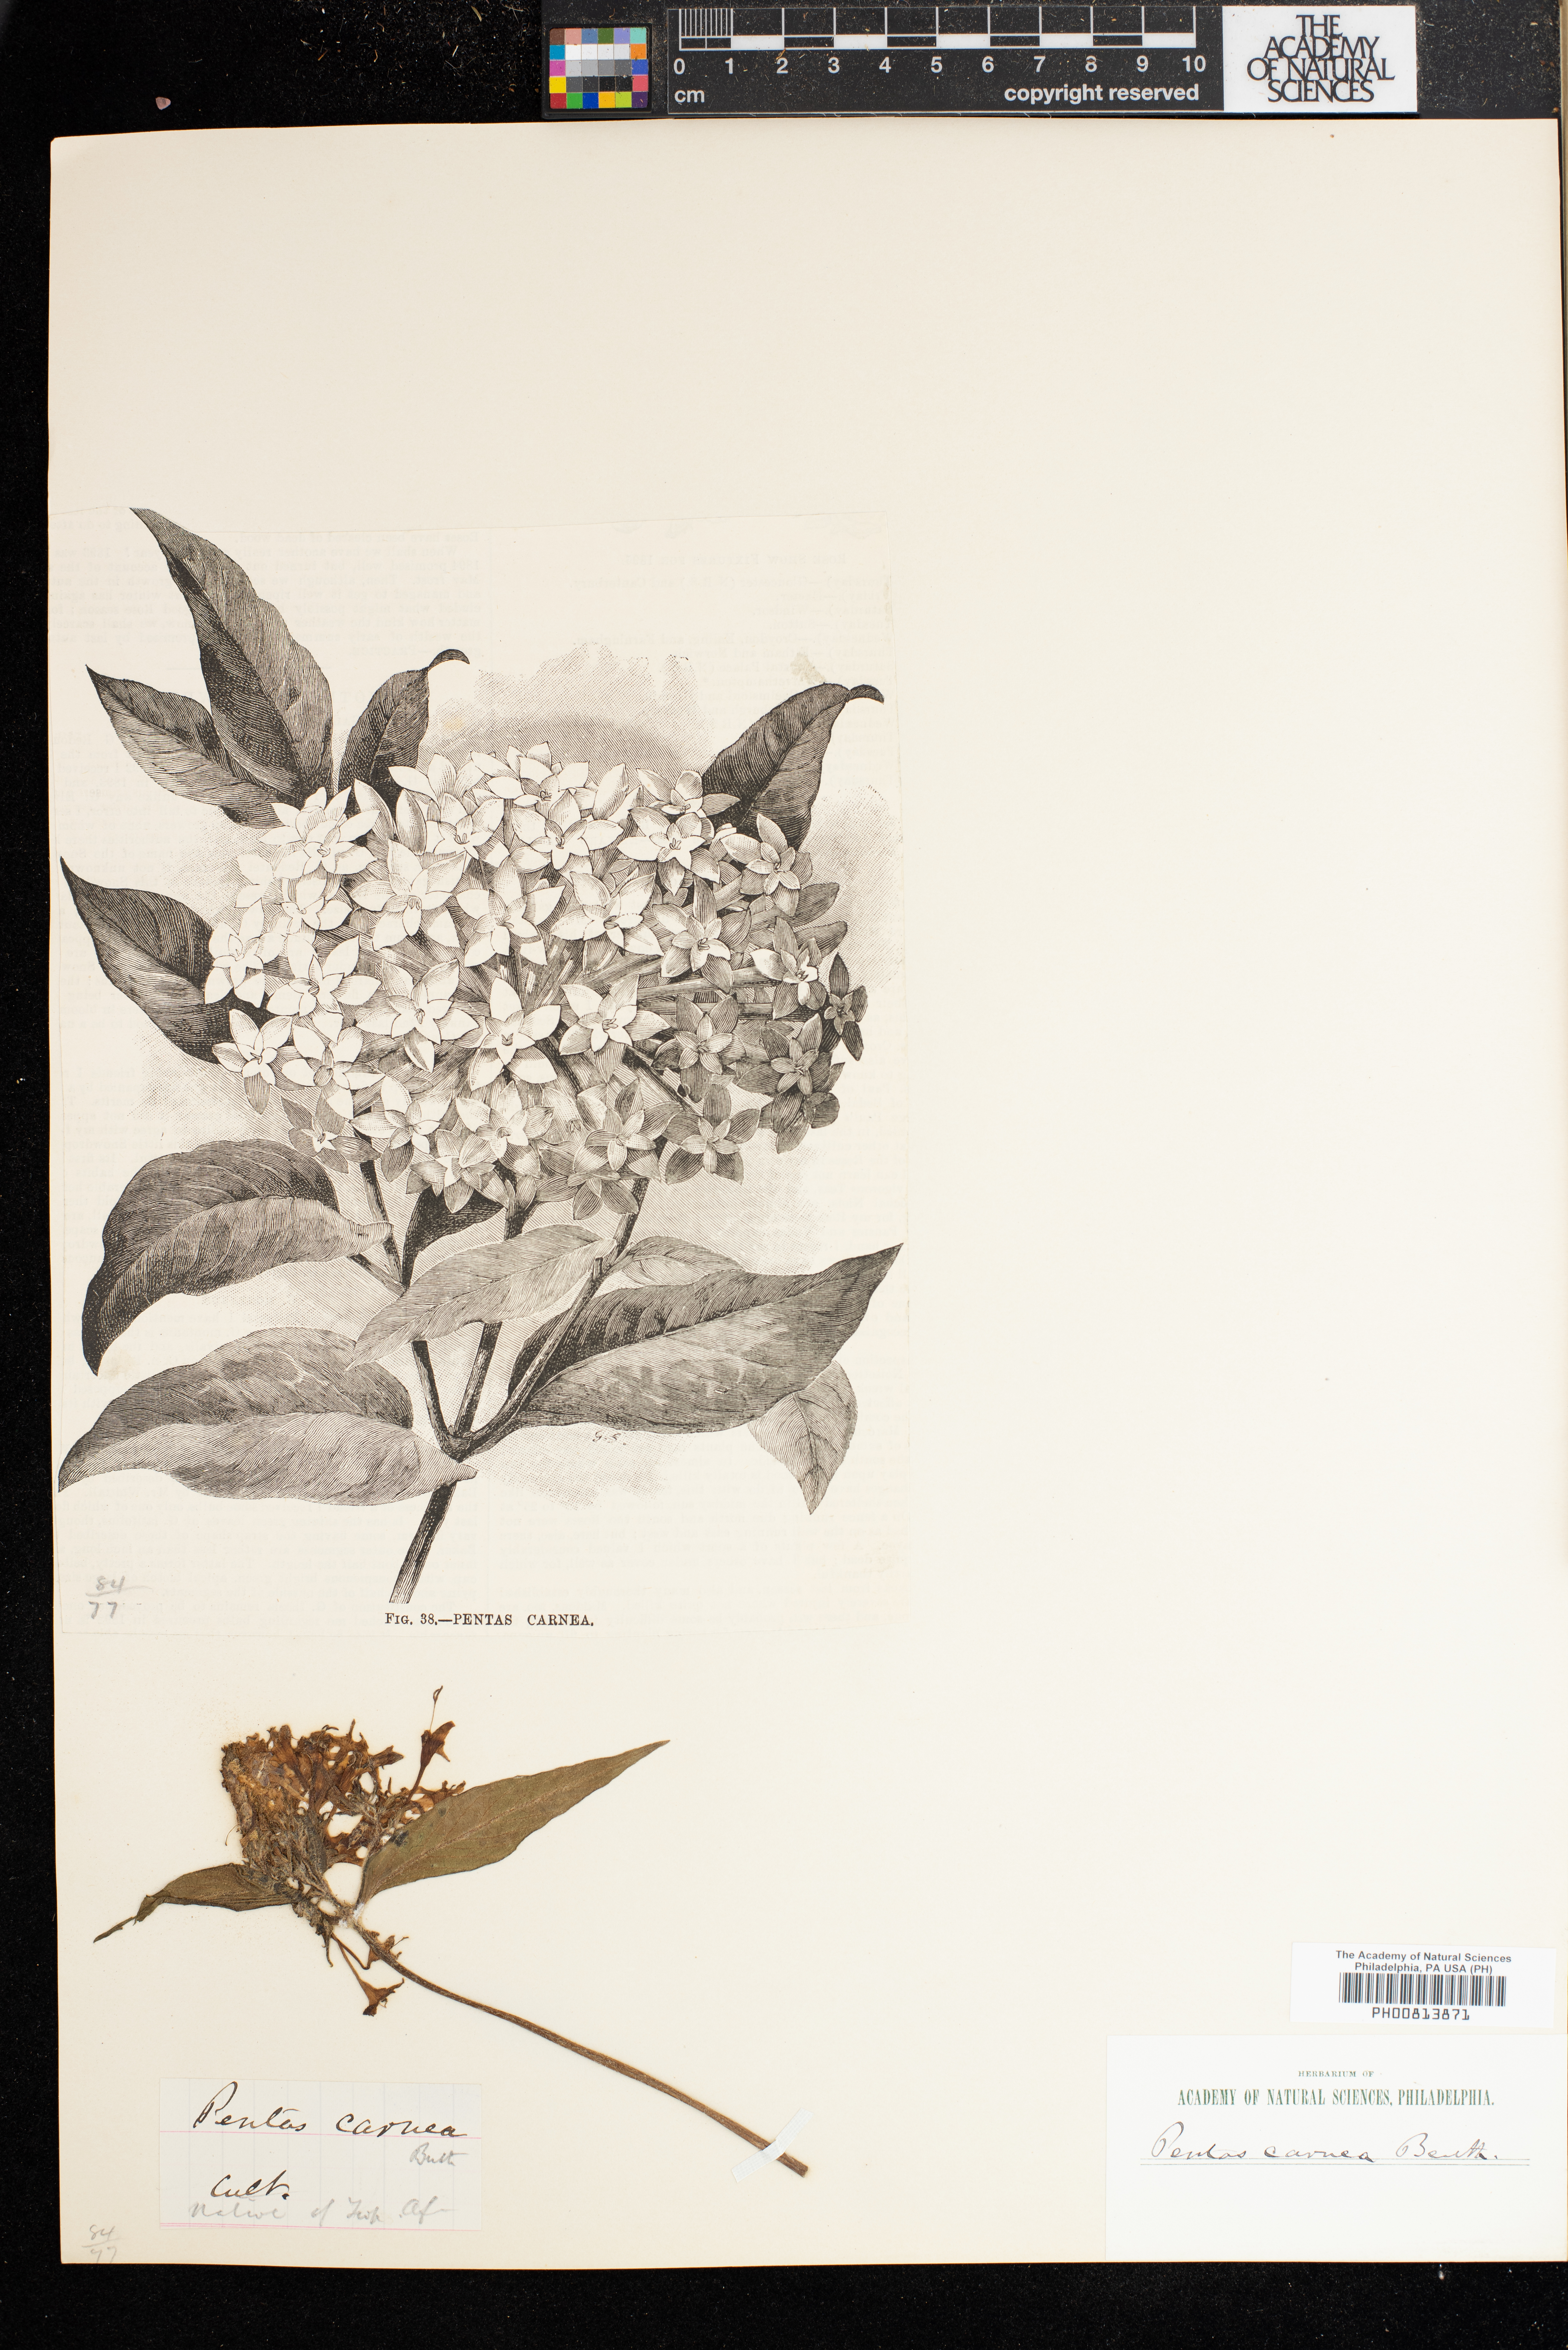 Pentas lanceolata subsp. cymosa image